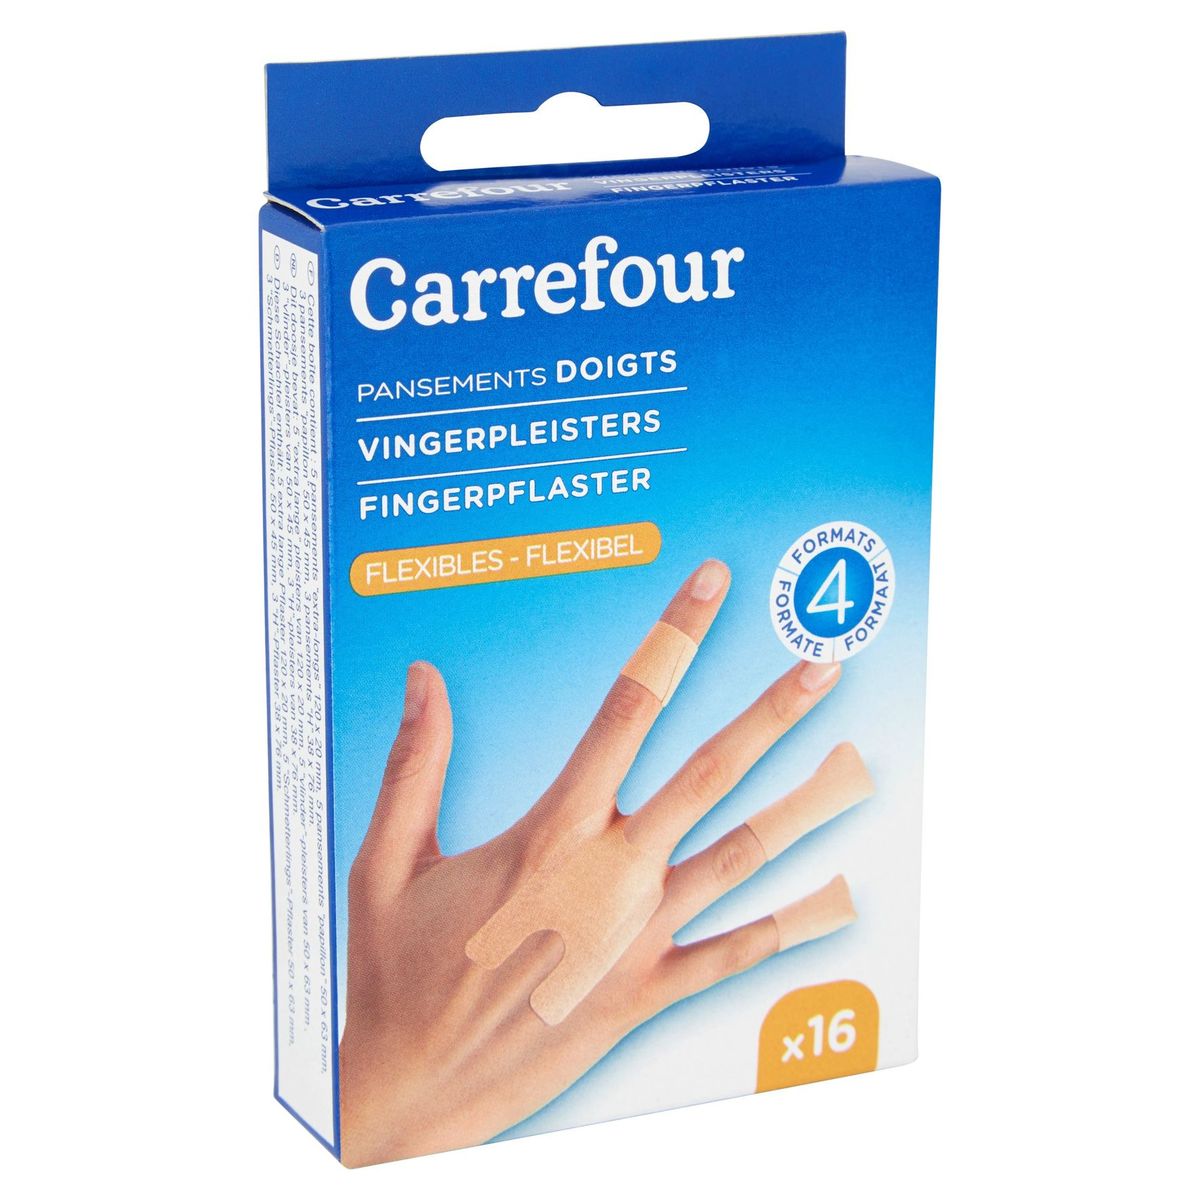 Carrefour Vingerpleisters Flexibel x 16